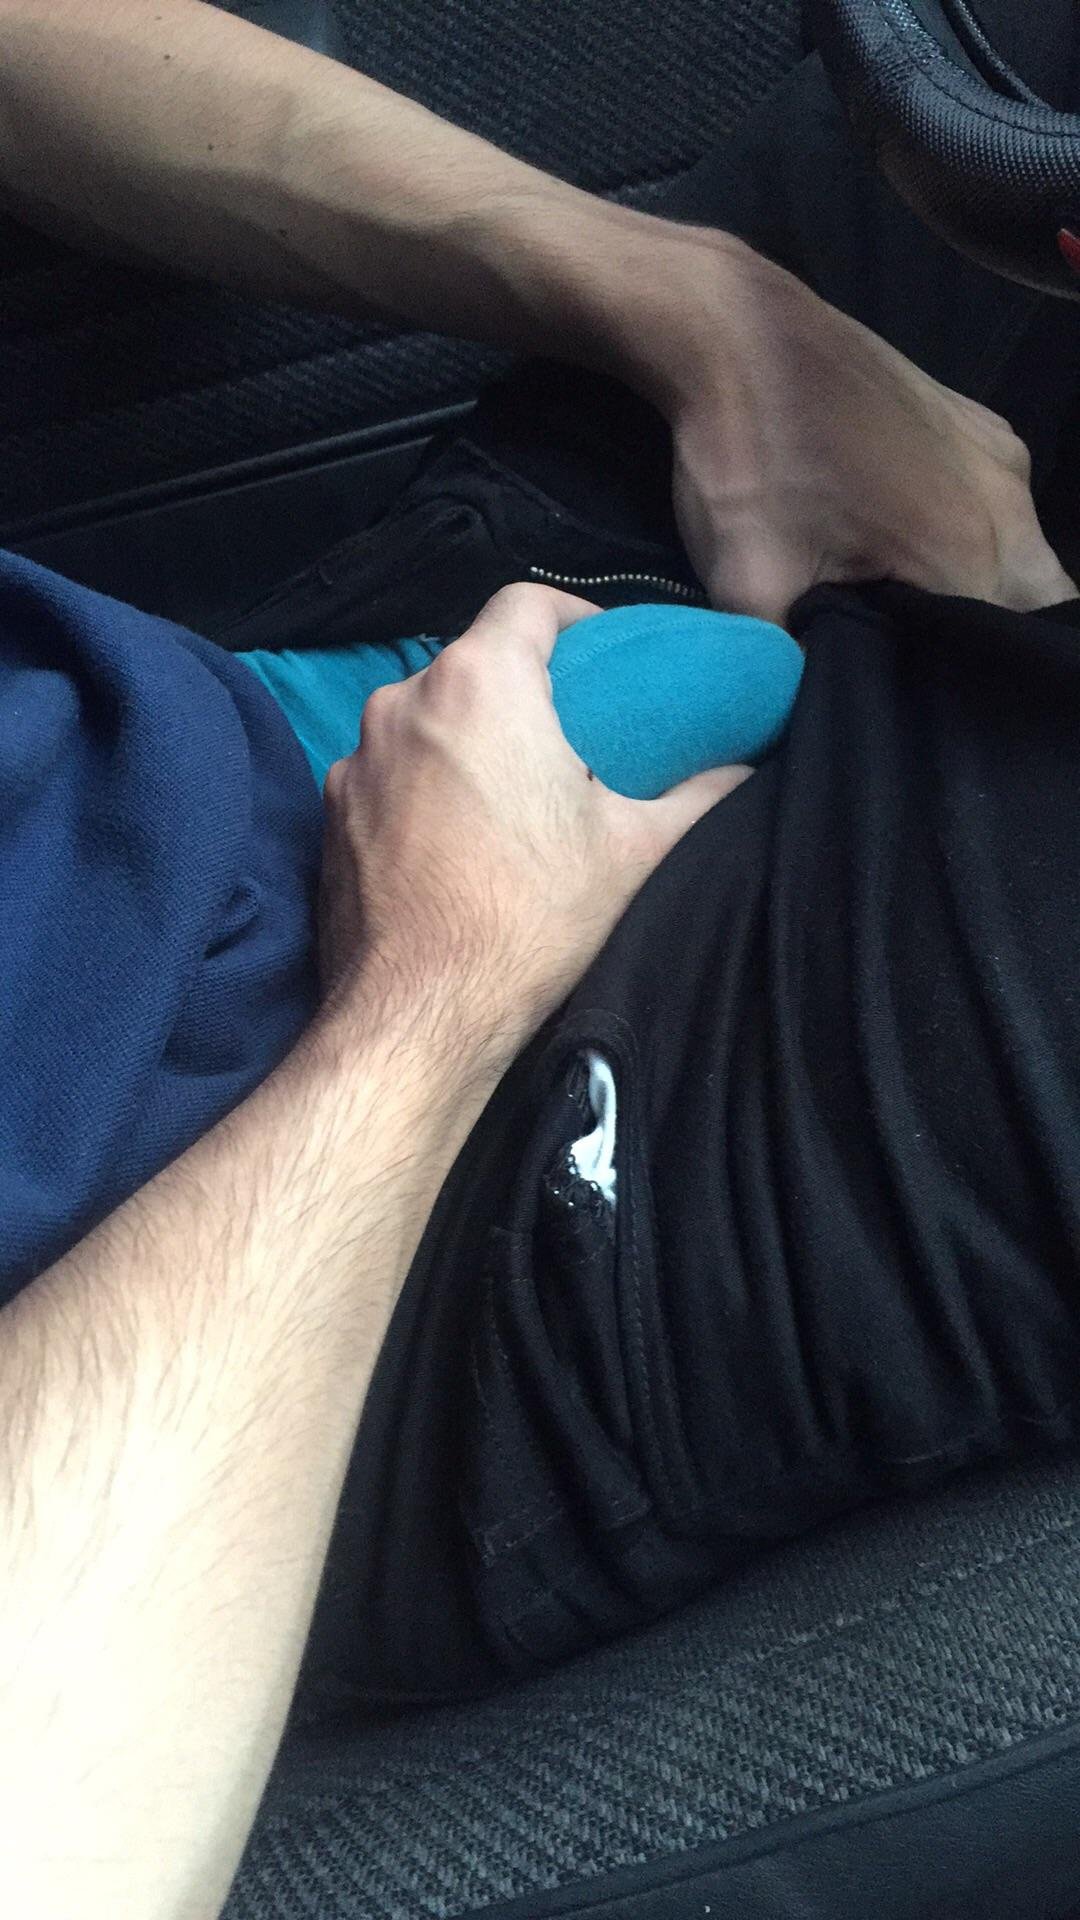 Getting kinky in the car